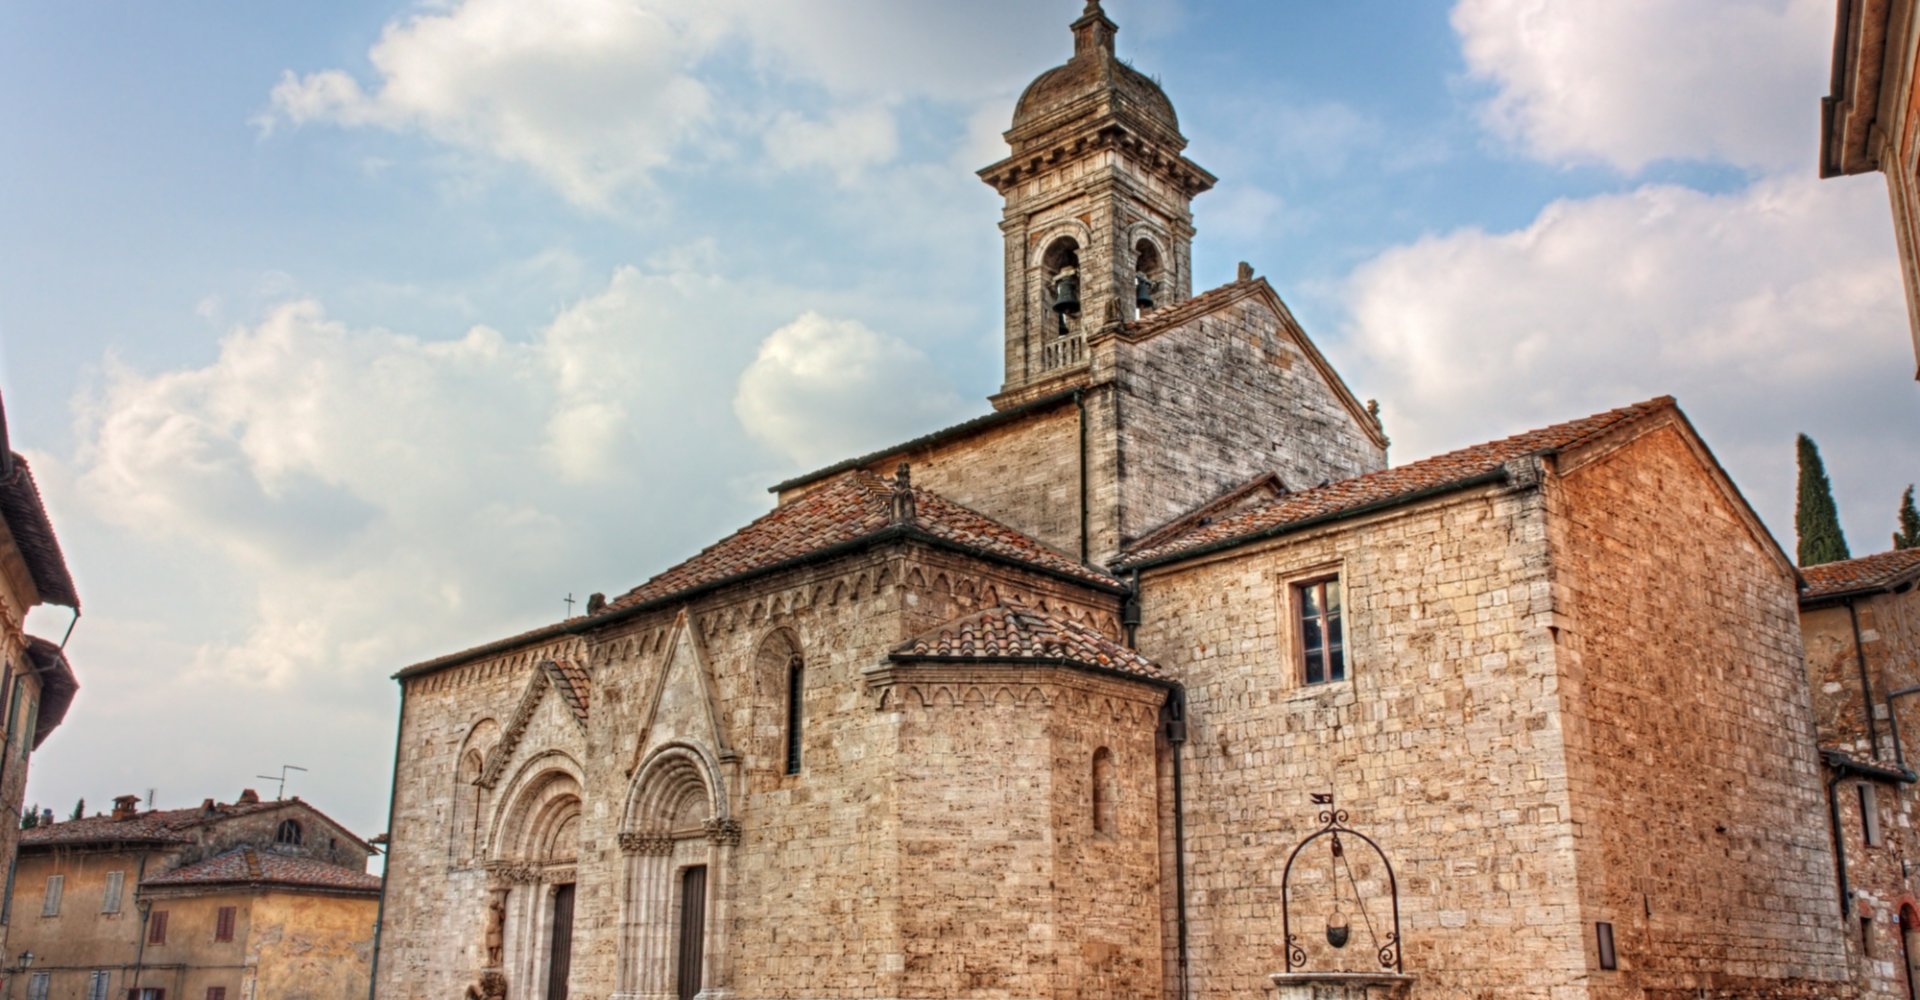 San Quirico d’Orcia, Pieve dei Santi Quirico e Giulietta (église paroissiale)